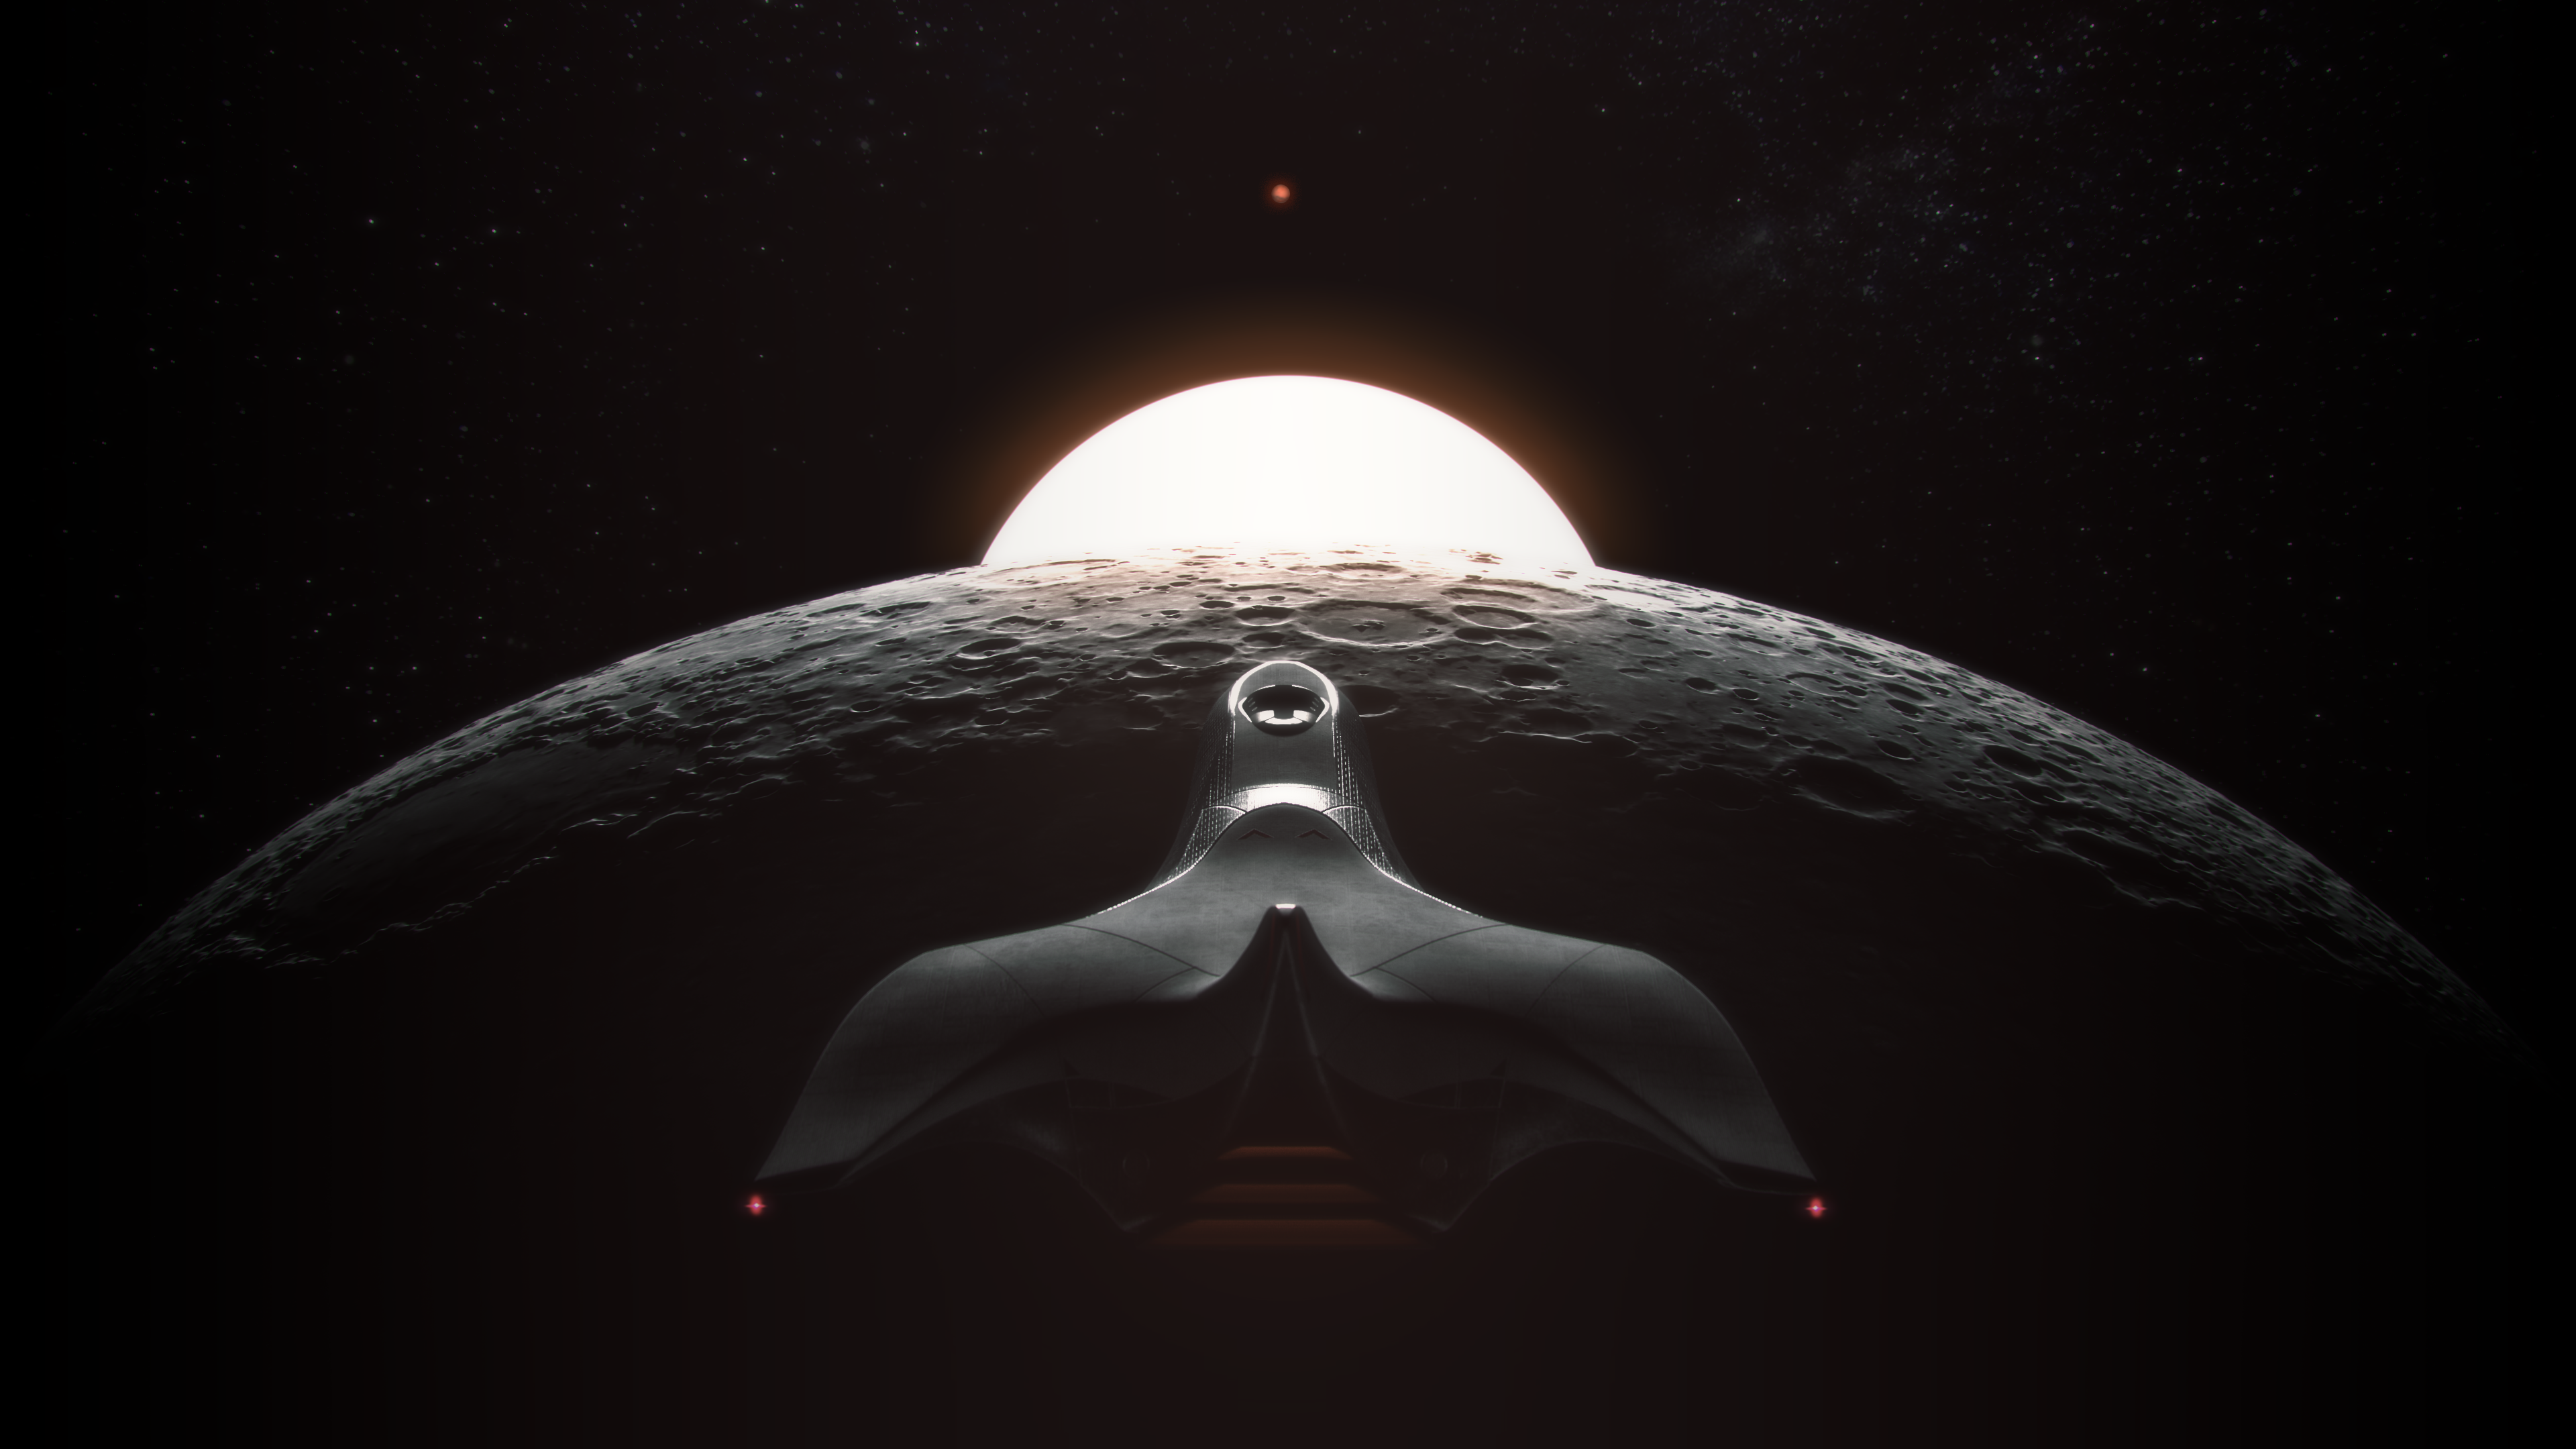 Man on The Moon Marzo 2018 (Digital) 